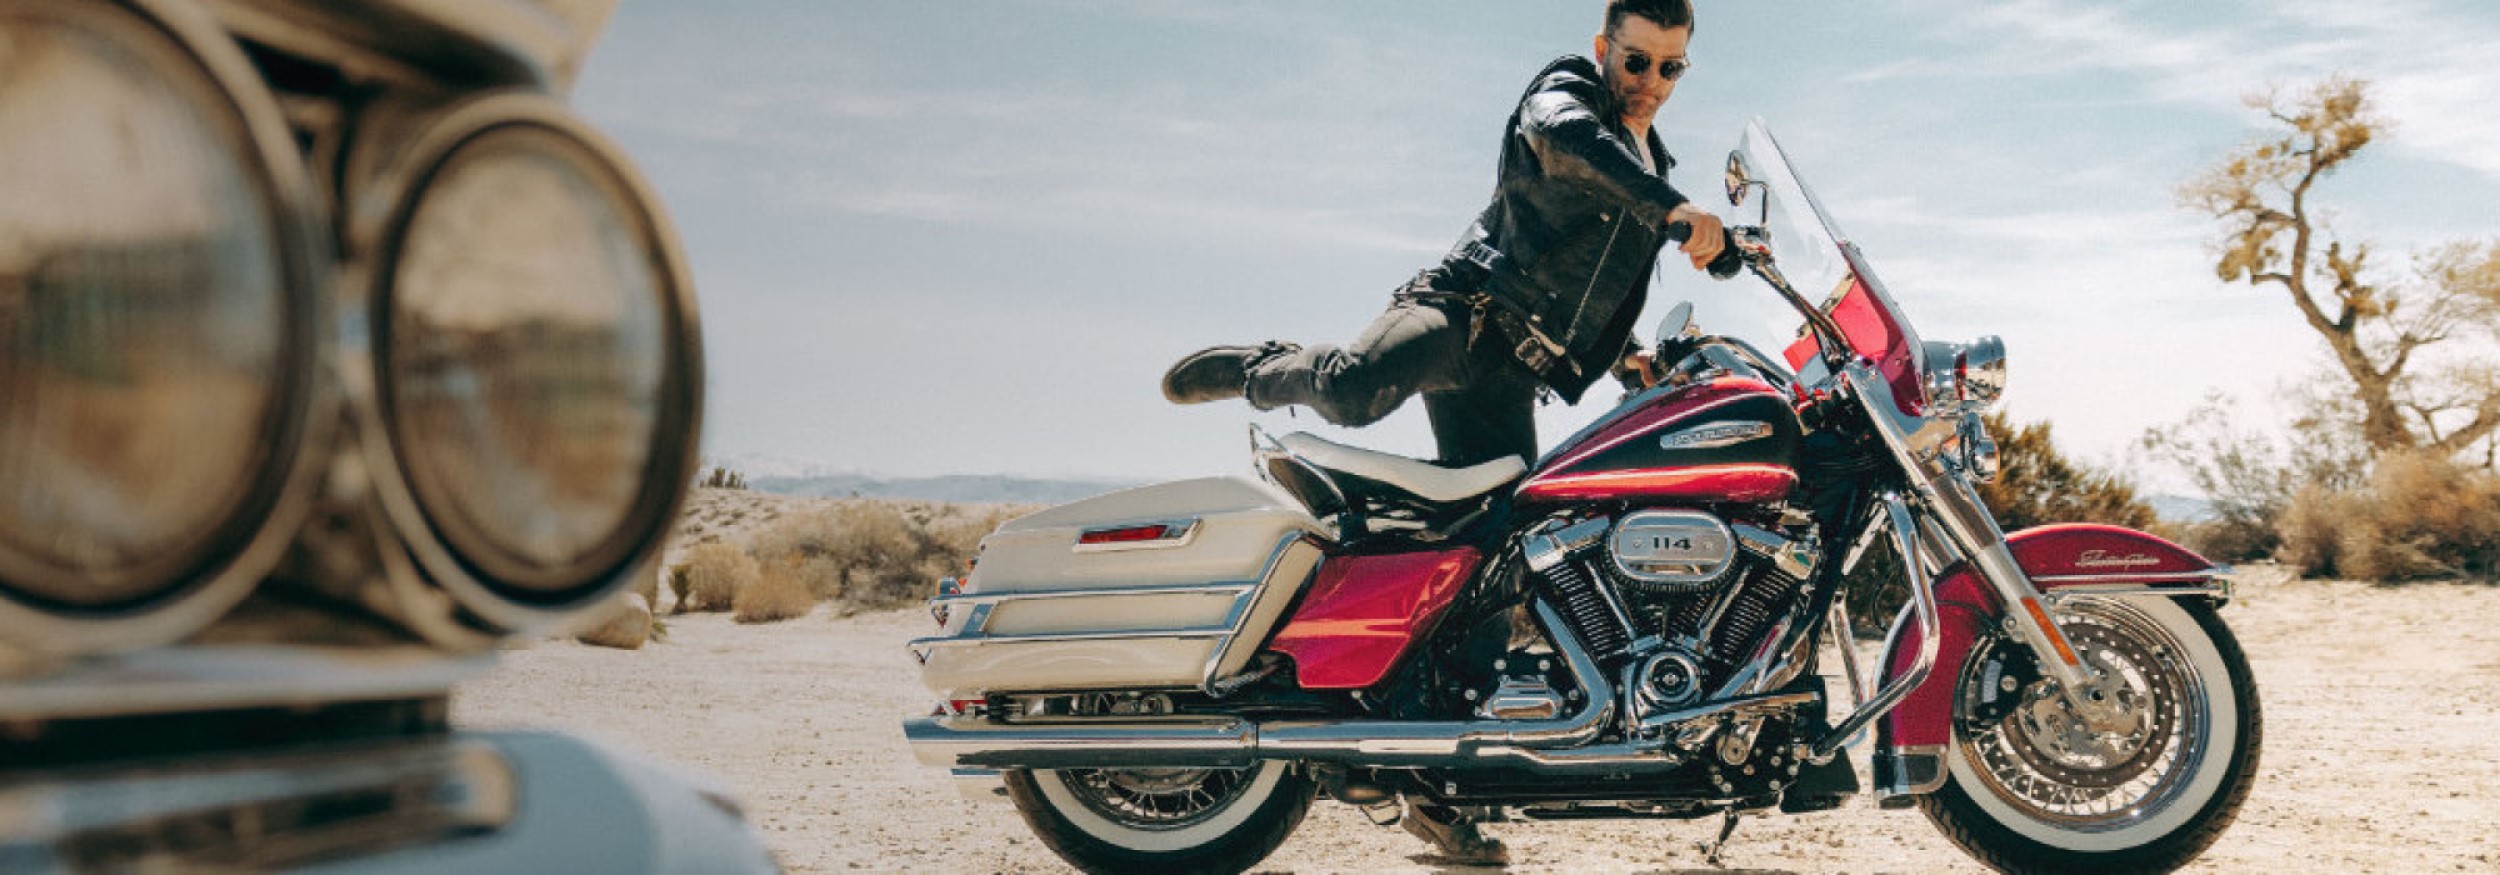 Rider mounting a Harley-Davidson Electra Glide Highway King in a desert landscape.